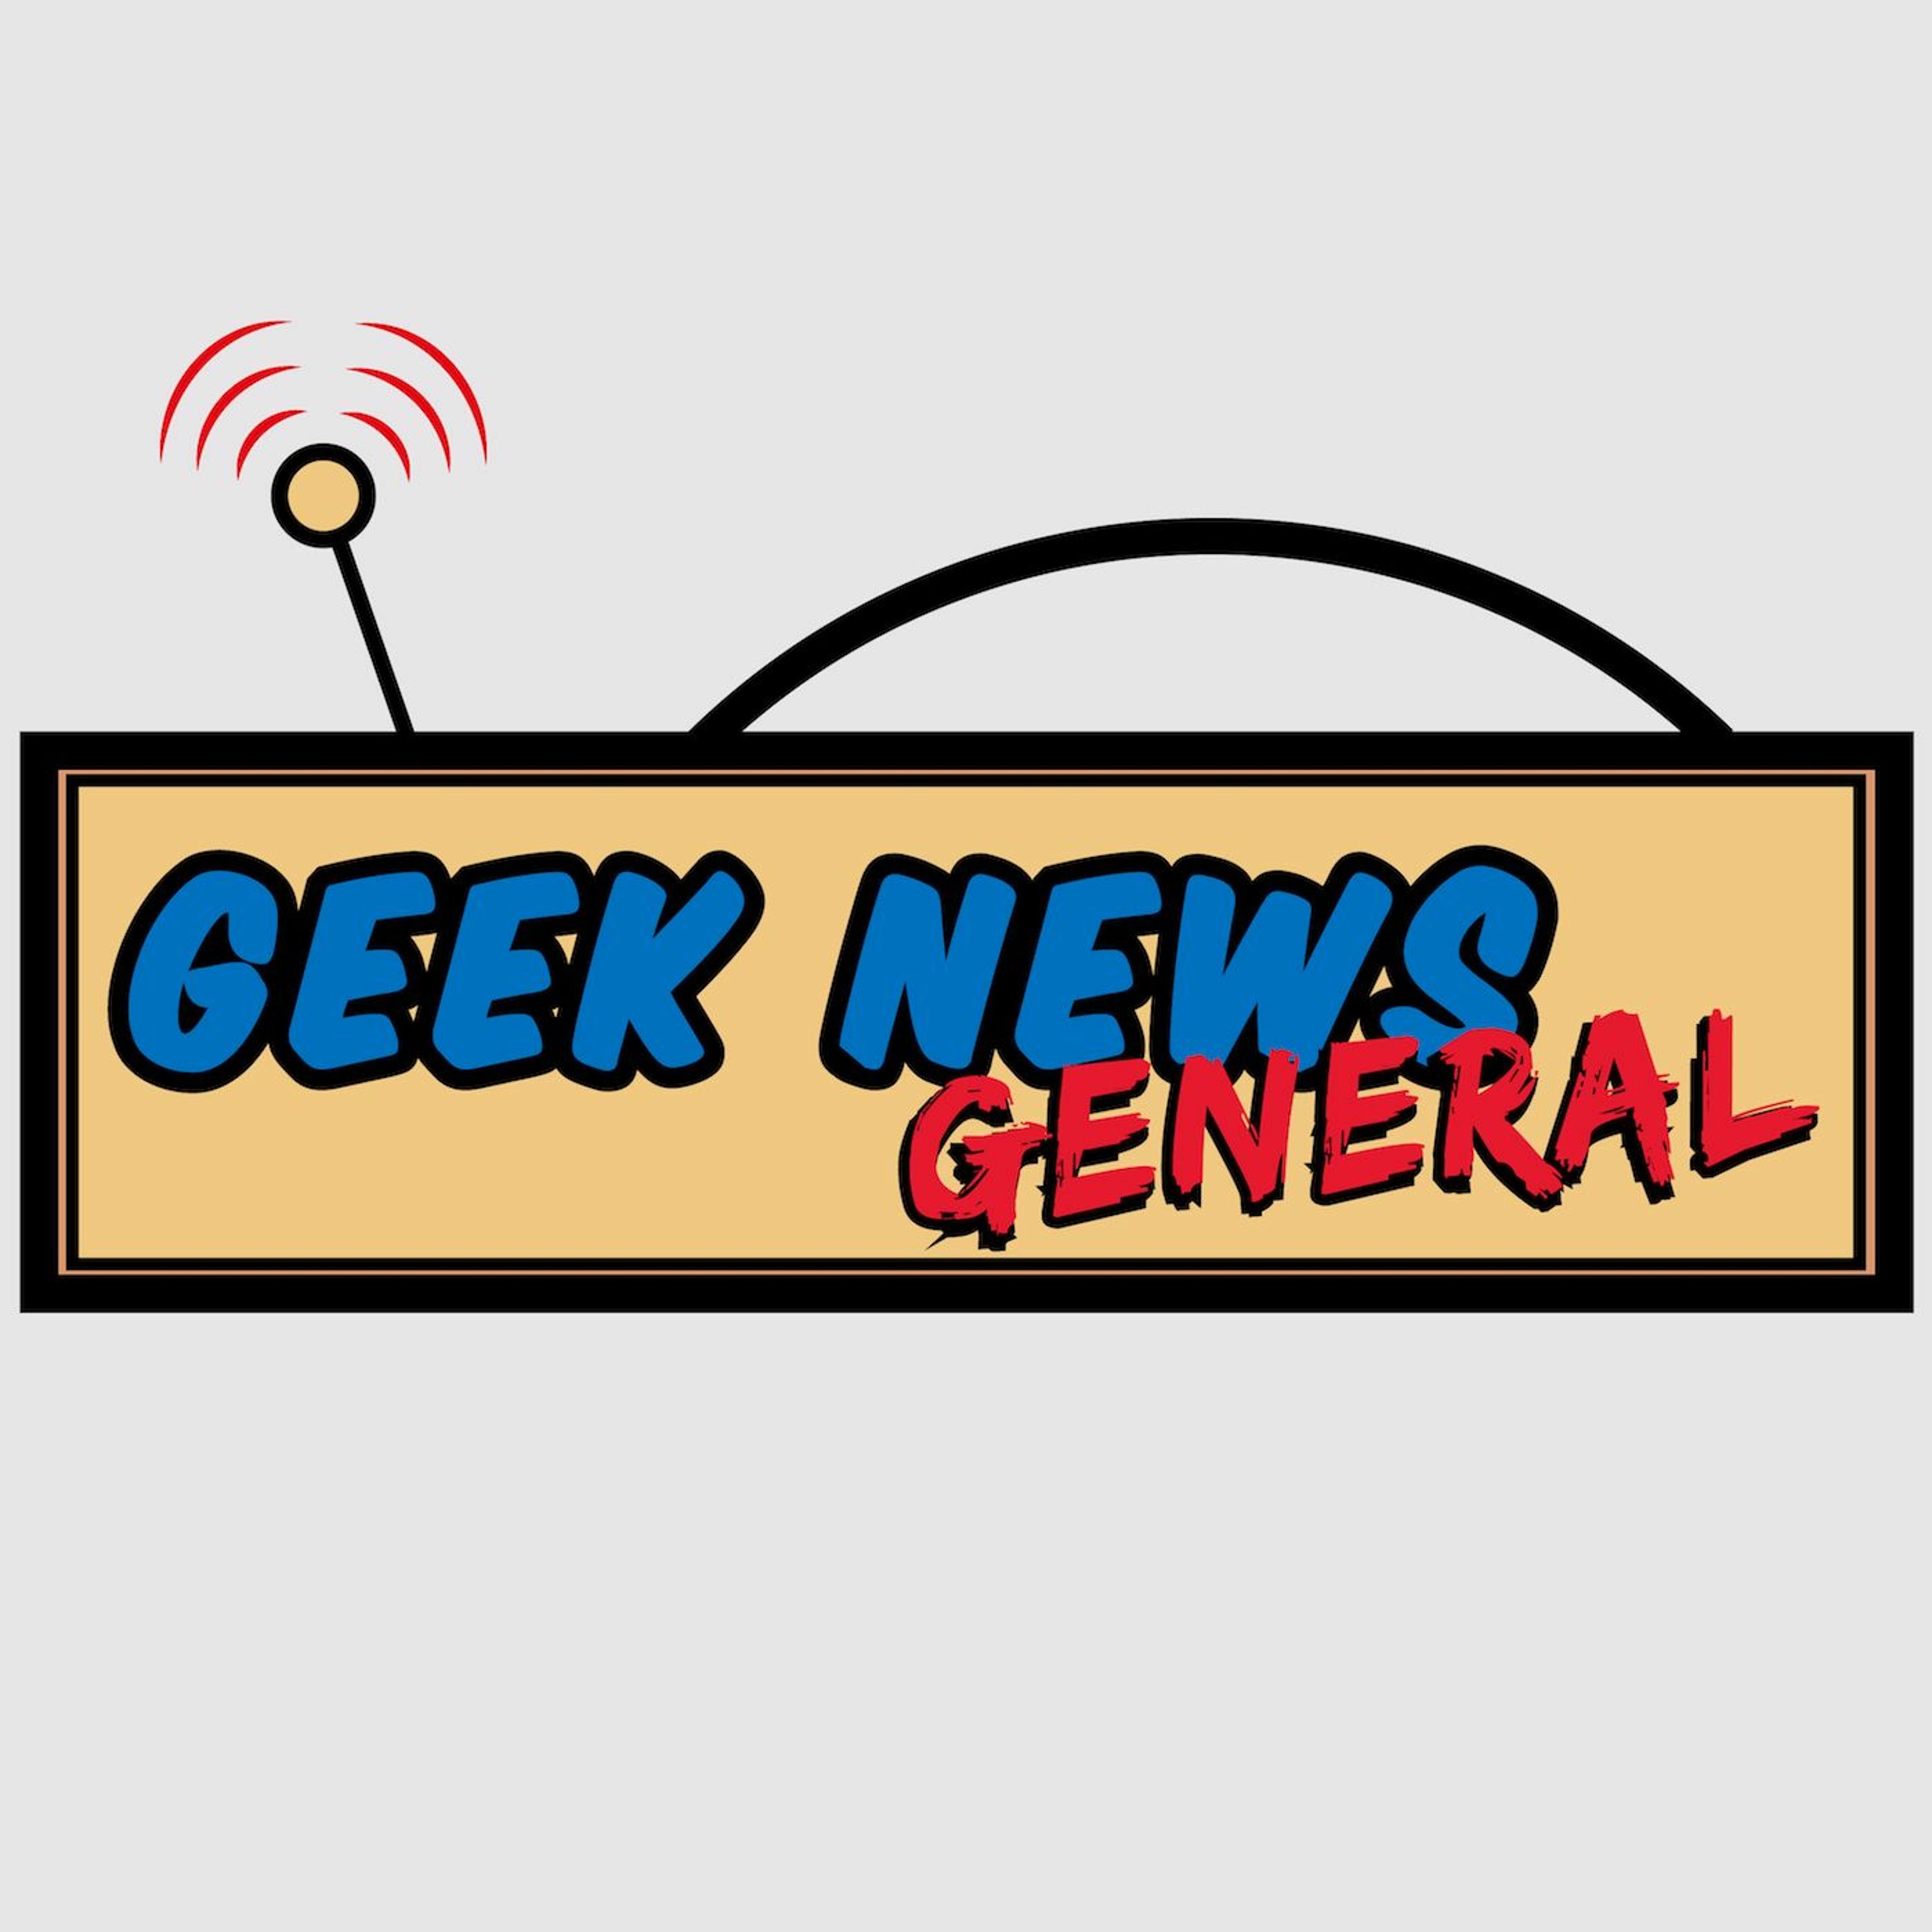 Ep 14 | Last Jedi Trailer #2 Video Podcast Reaction | GEEK NEWS GENERAL